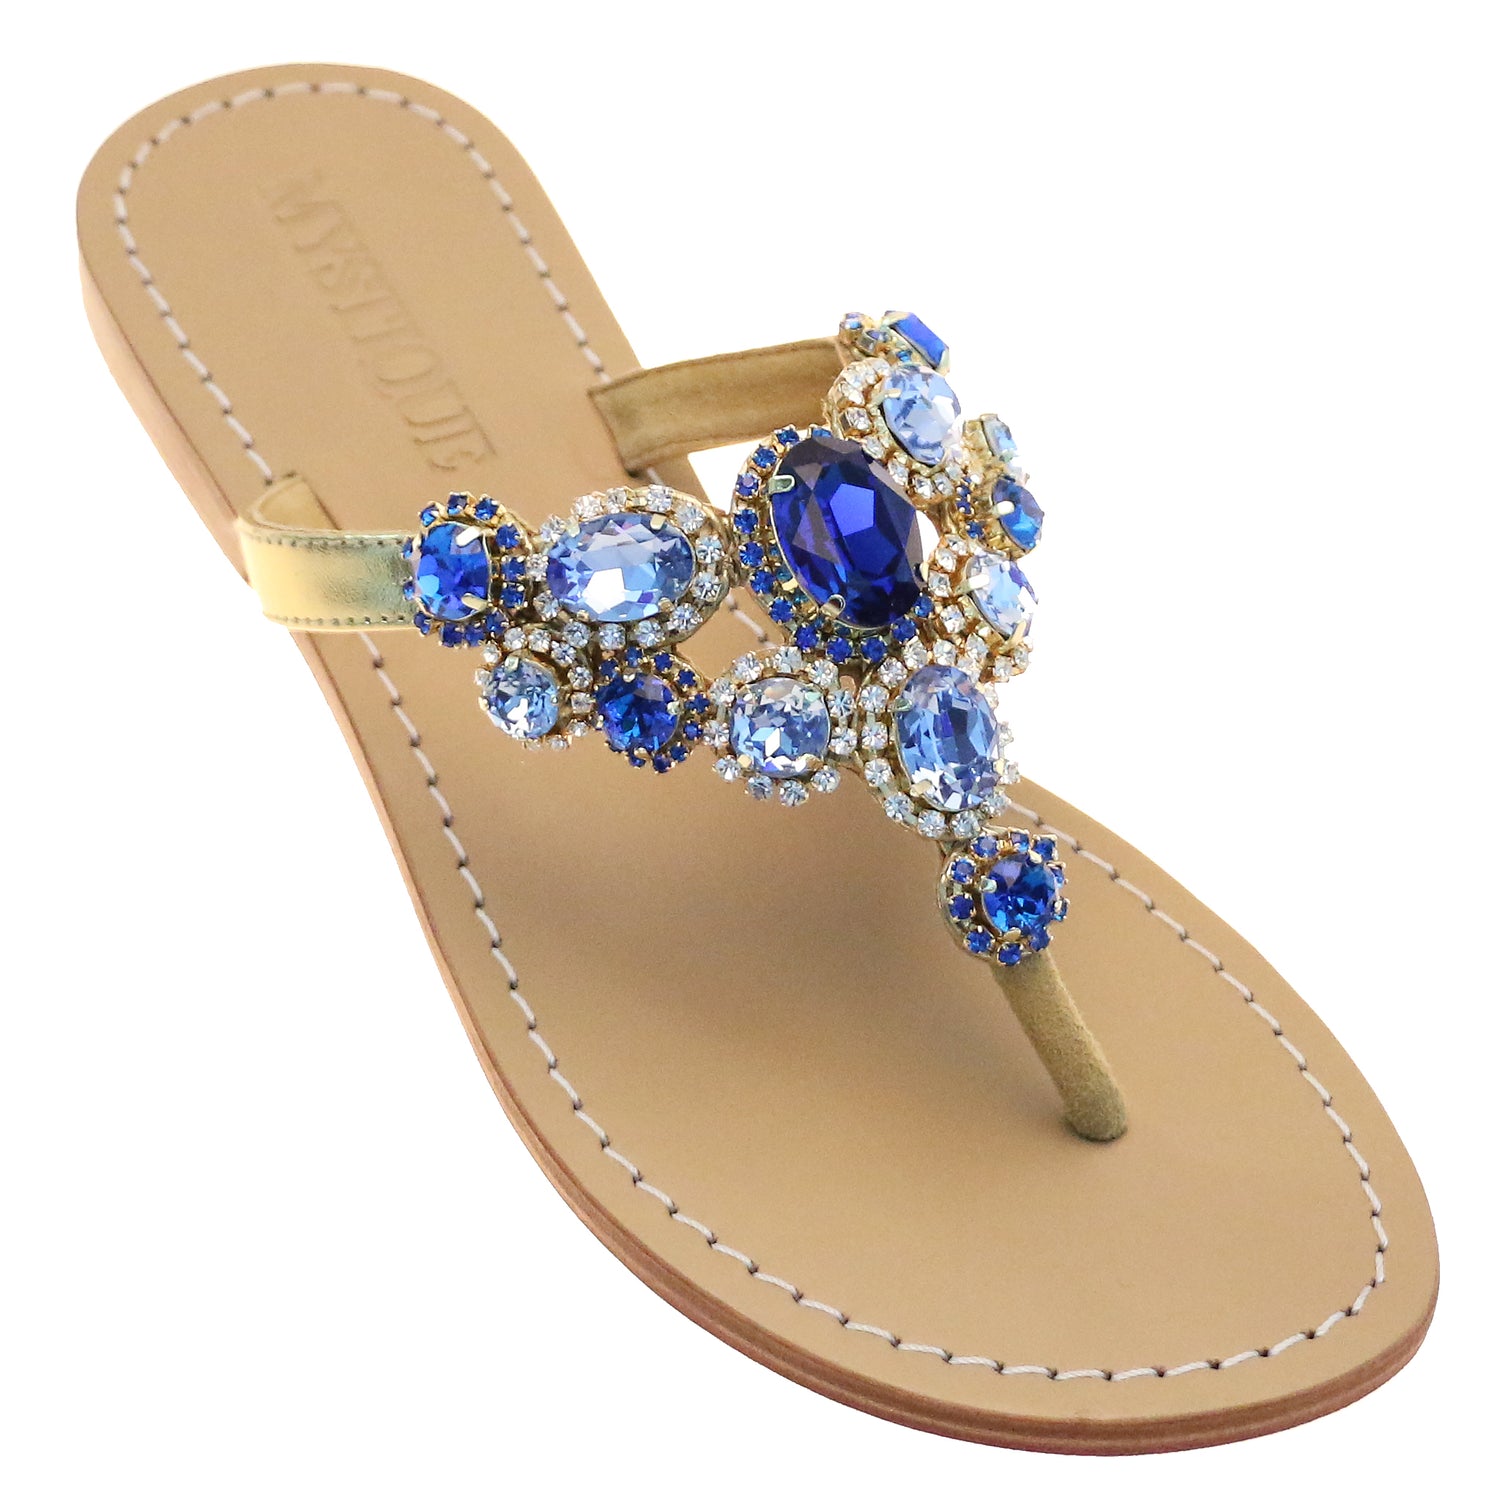 jeweled slippers